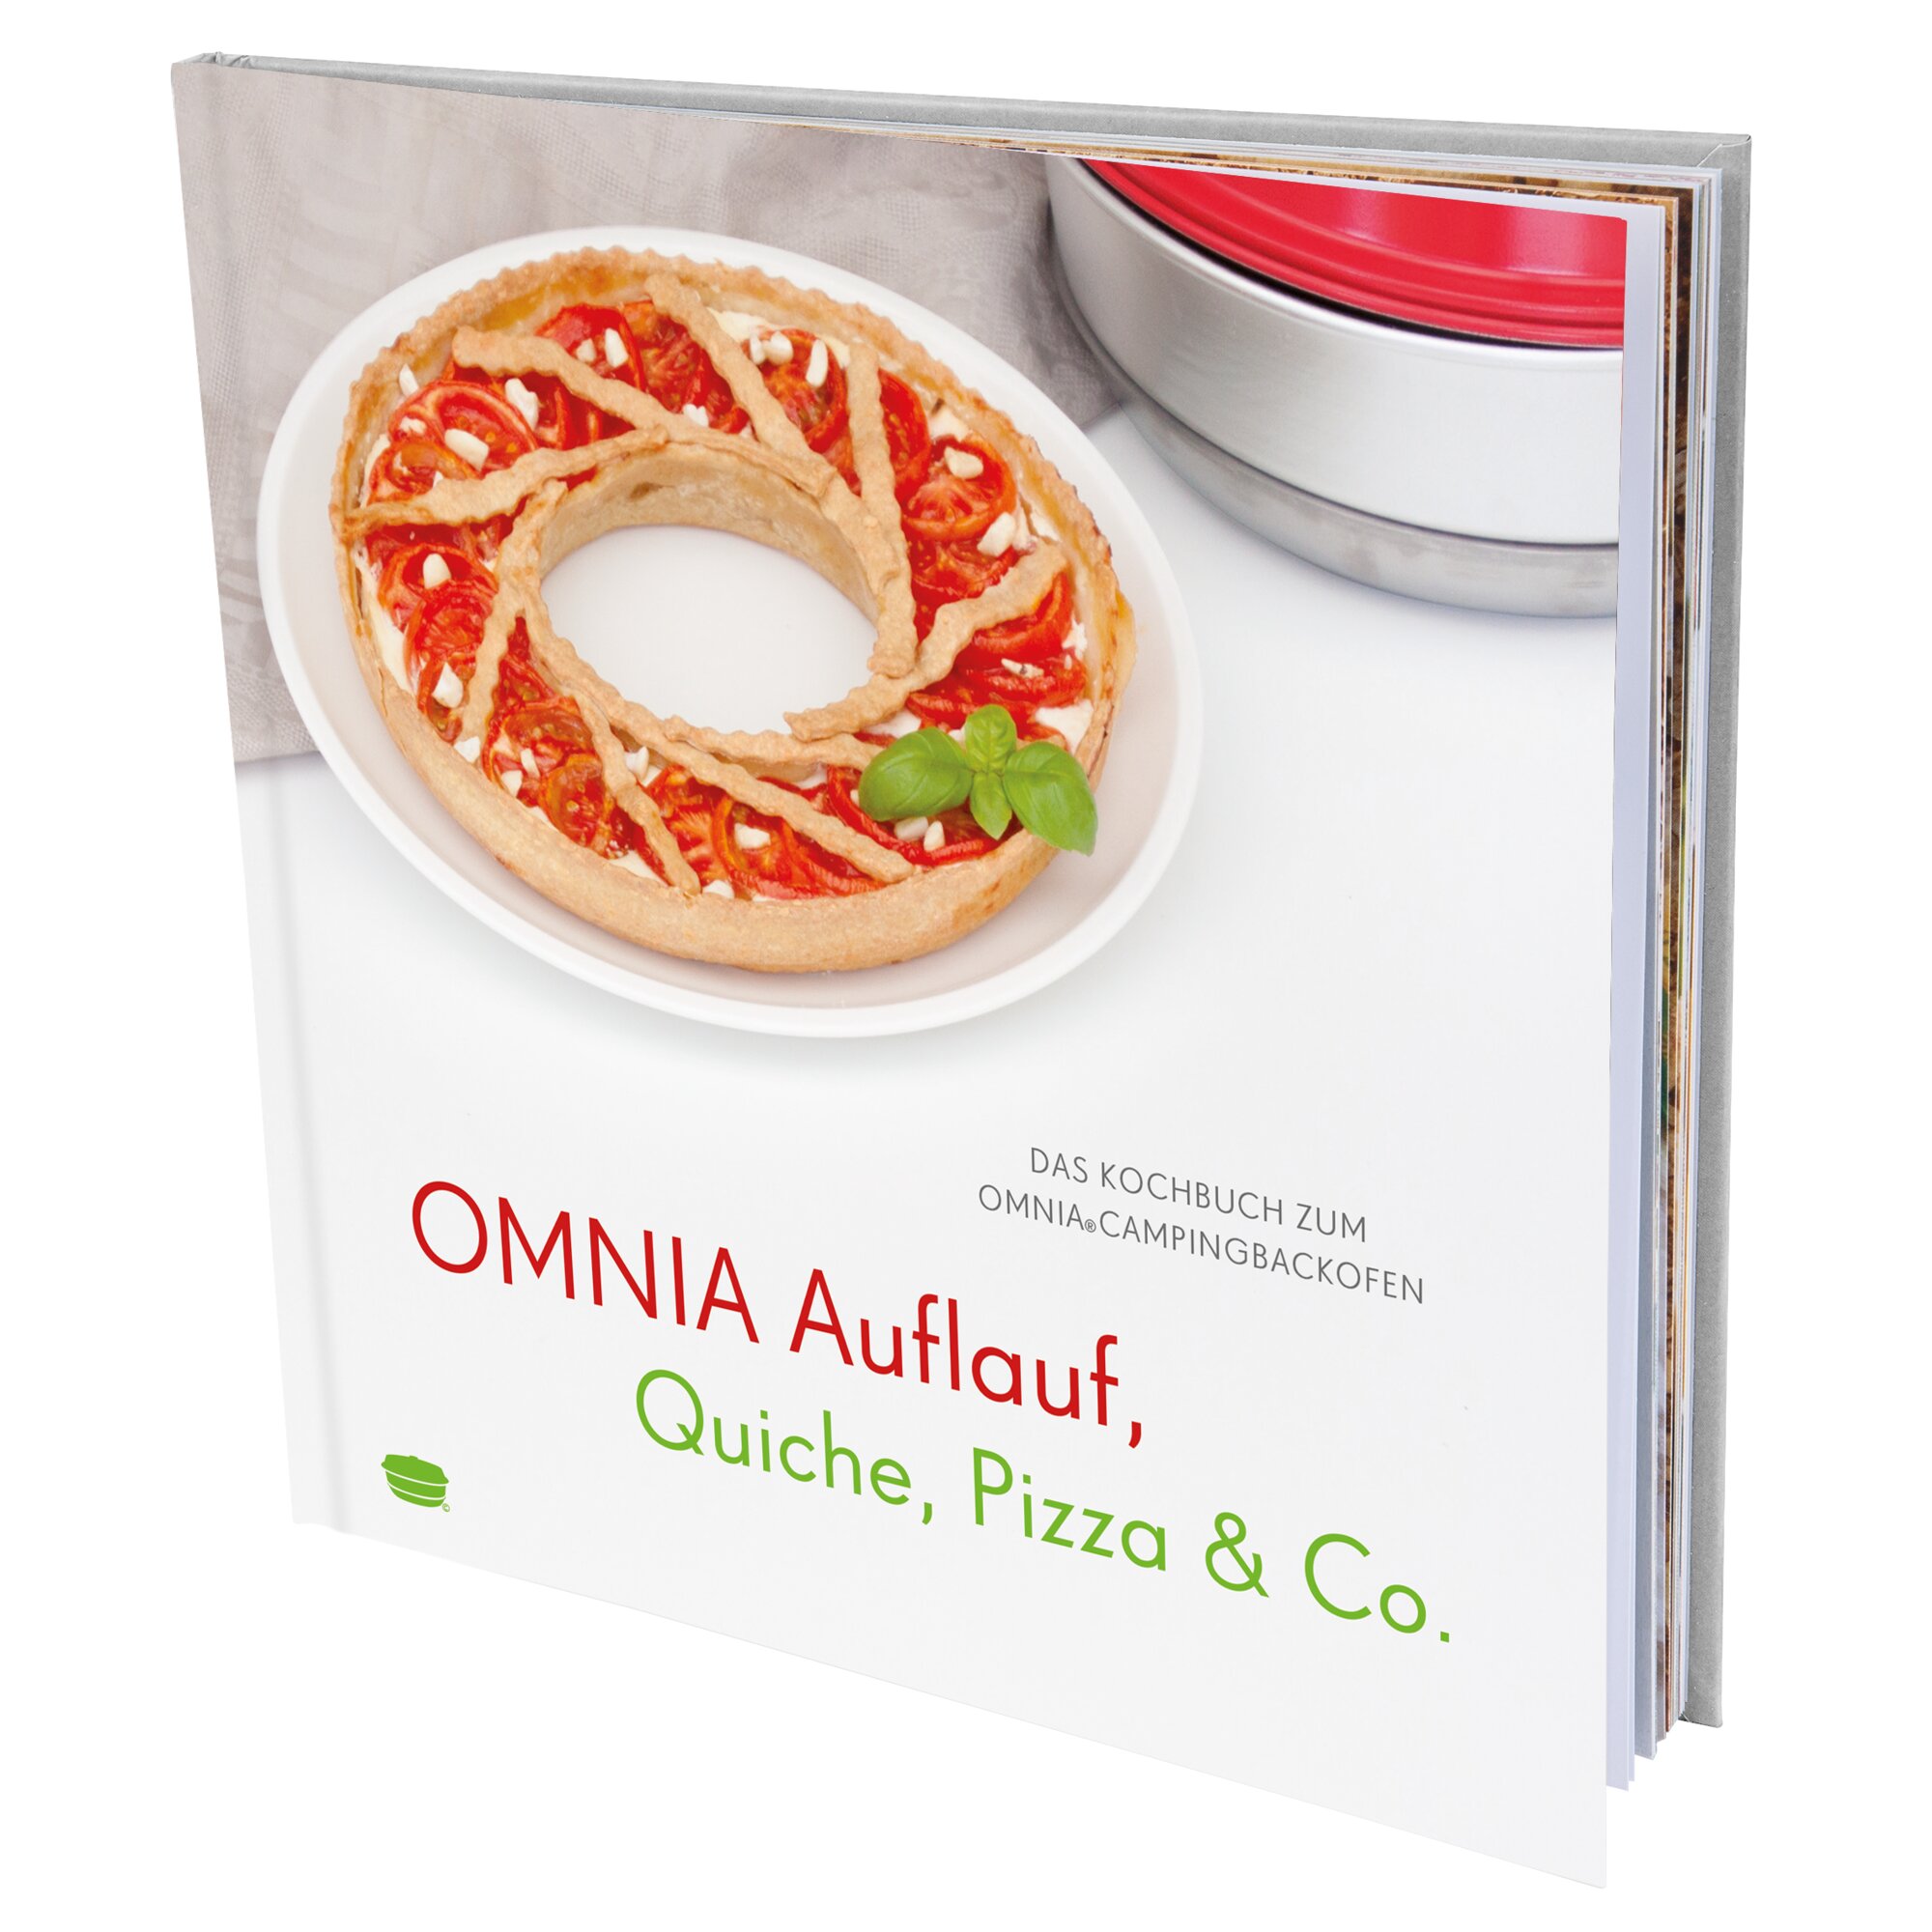 Omnia Kochbuch – Auflauf, Quiche, Pizza & Co.